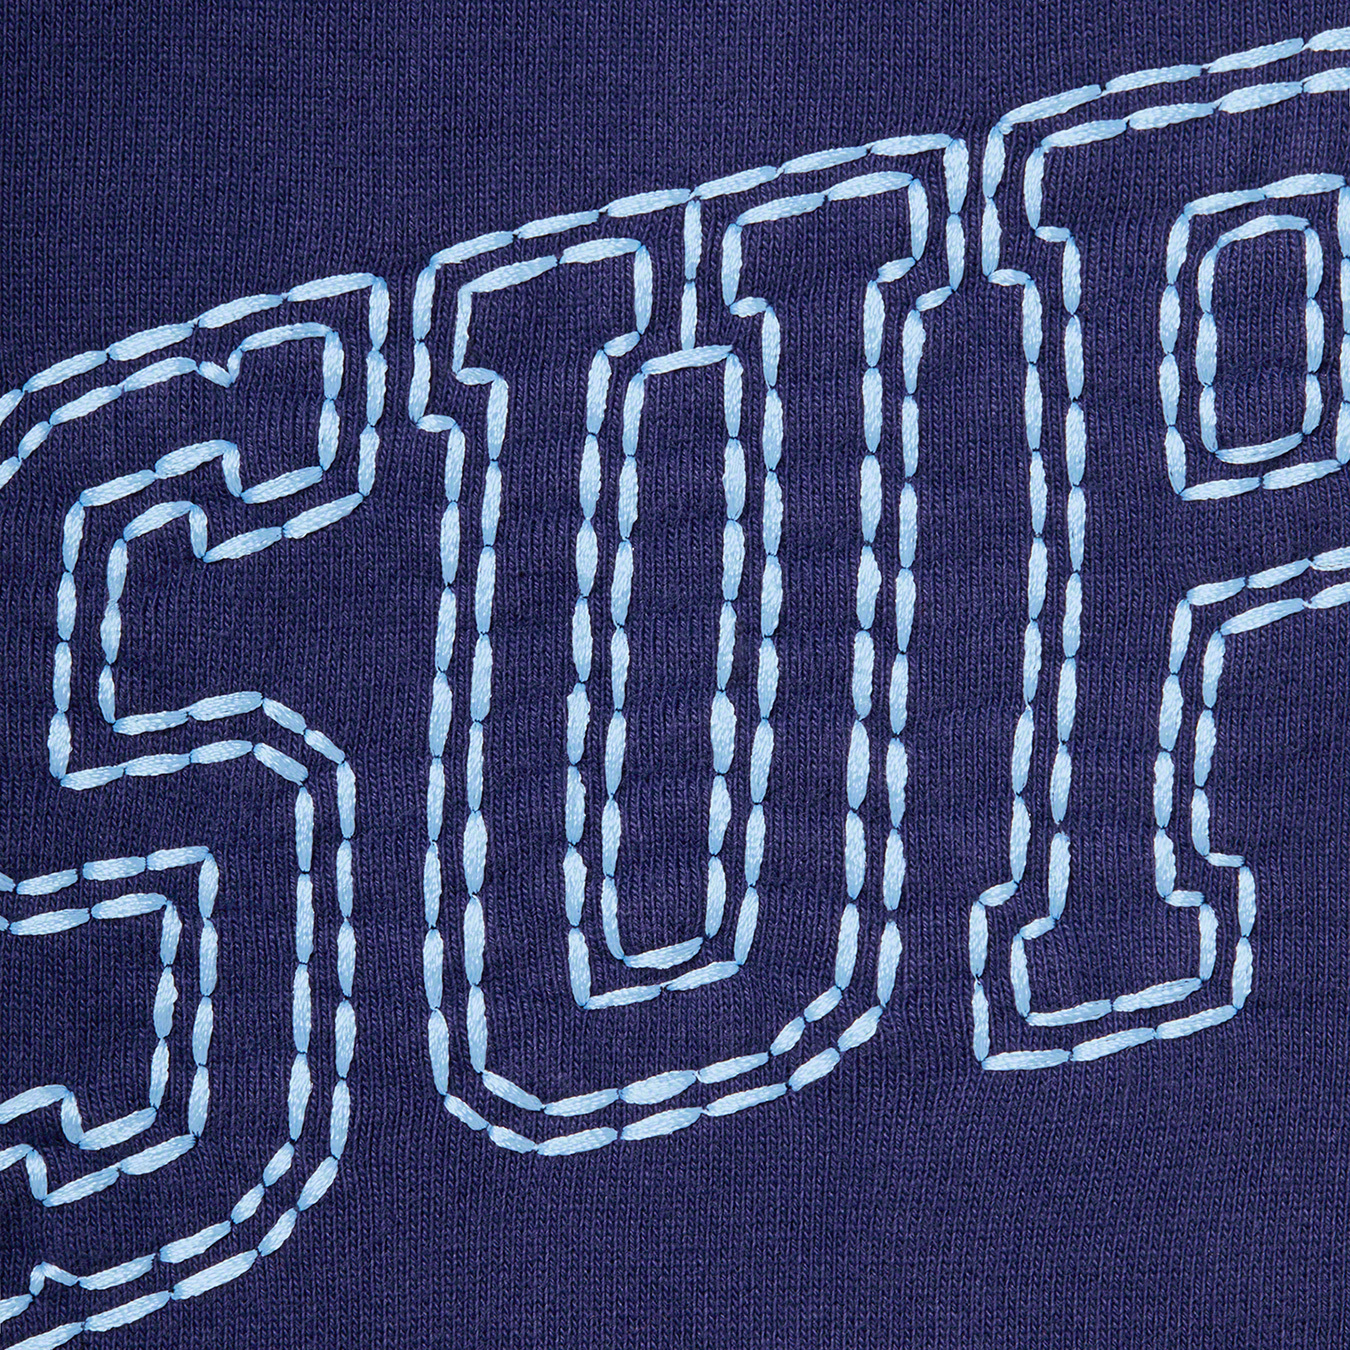 Big Stitch Hooded Sweatshirt - Supreme Community